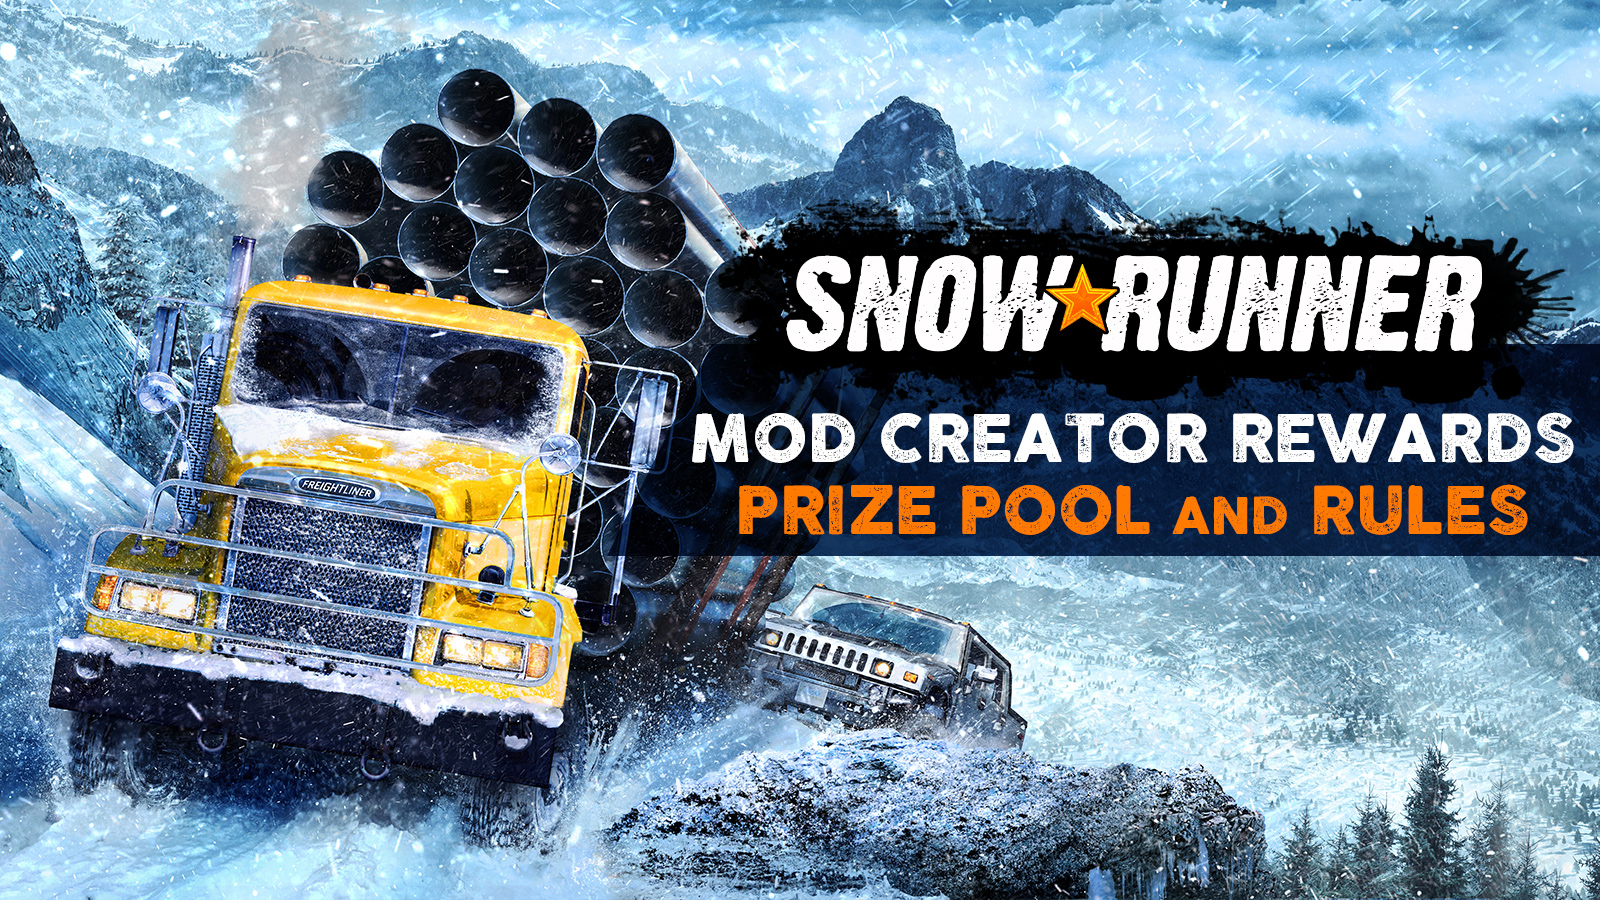 Innovative Creator Rewards Program aims to encourage more modding for SnowRunner